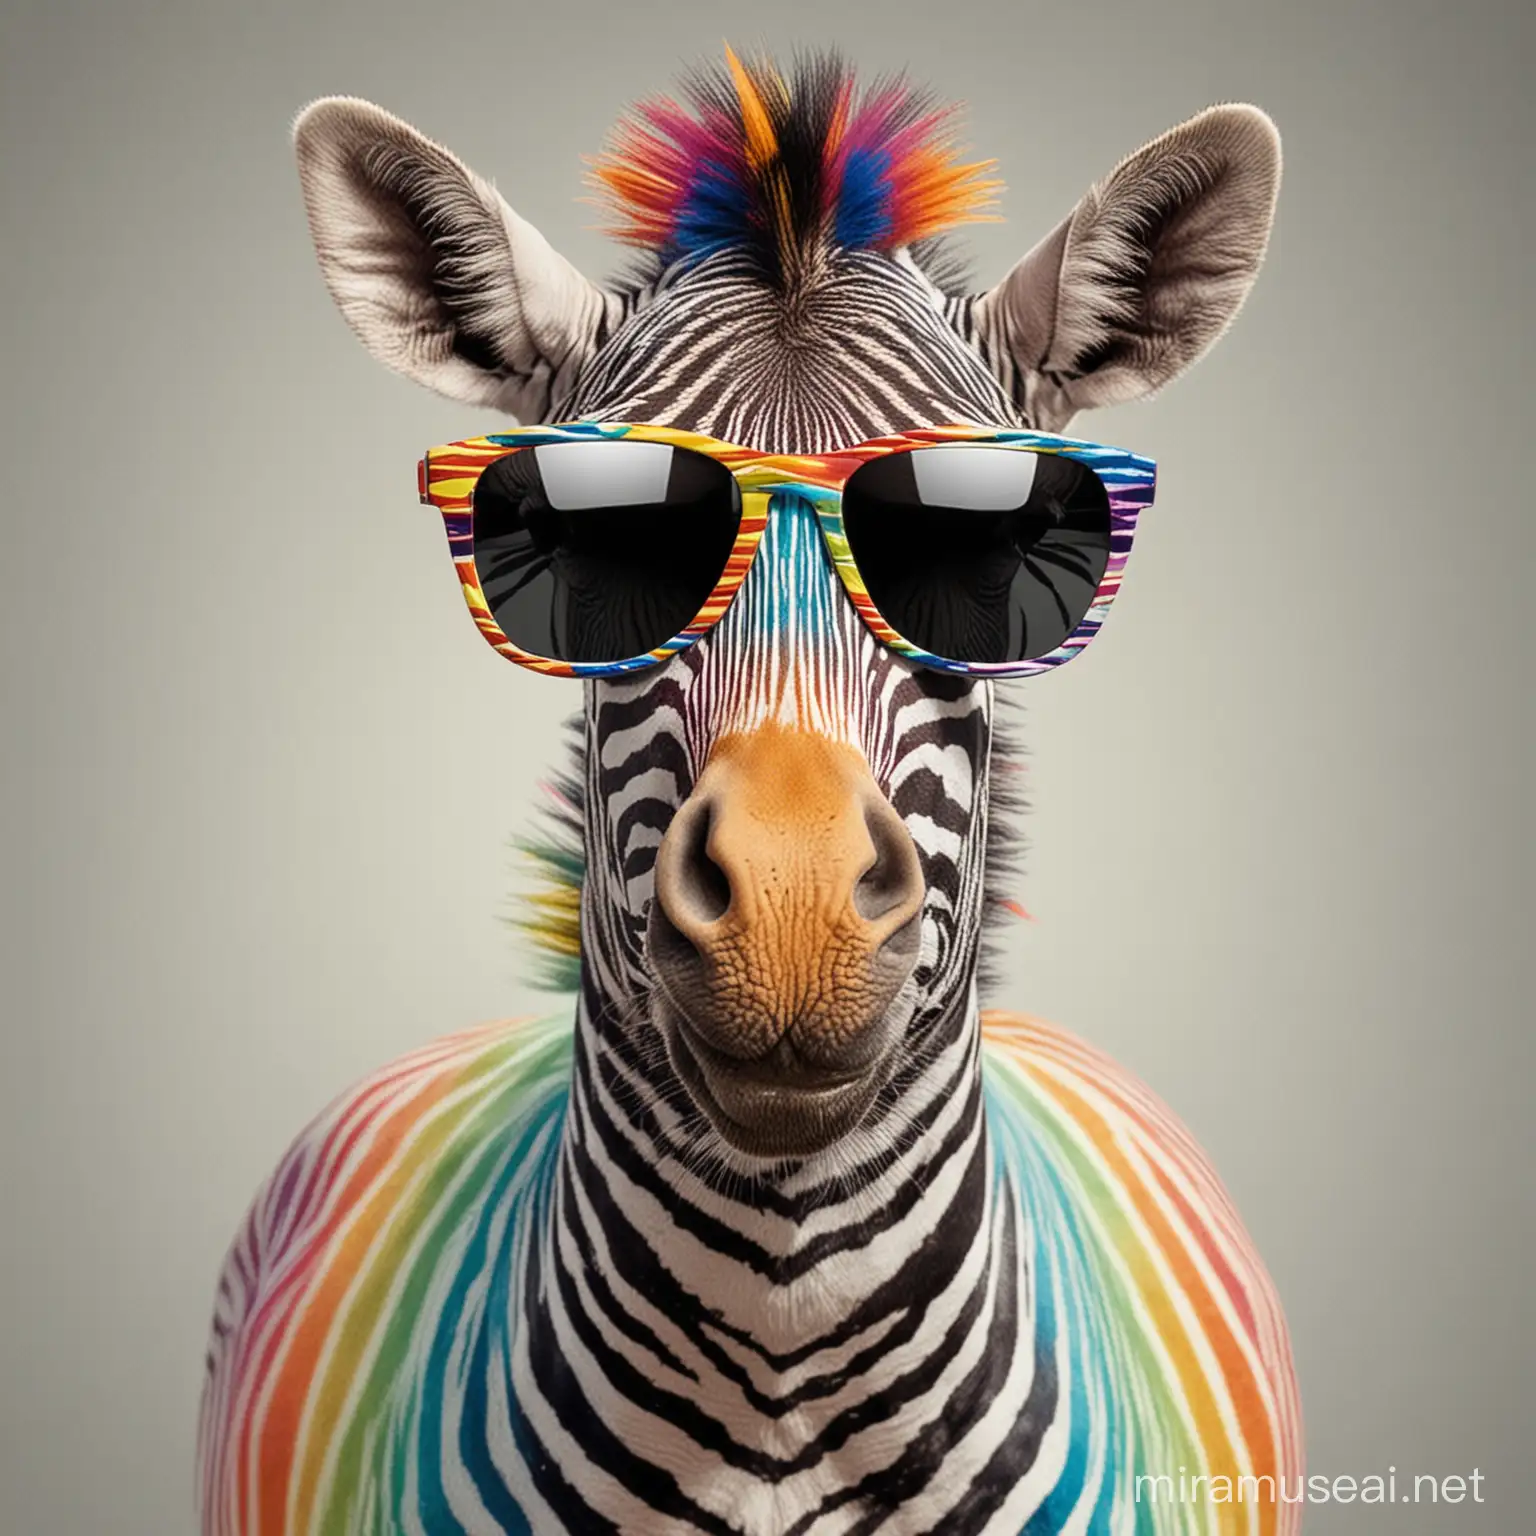 Vibrant Zebra Wearing Stylish Sunglasses